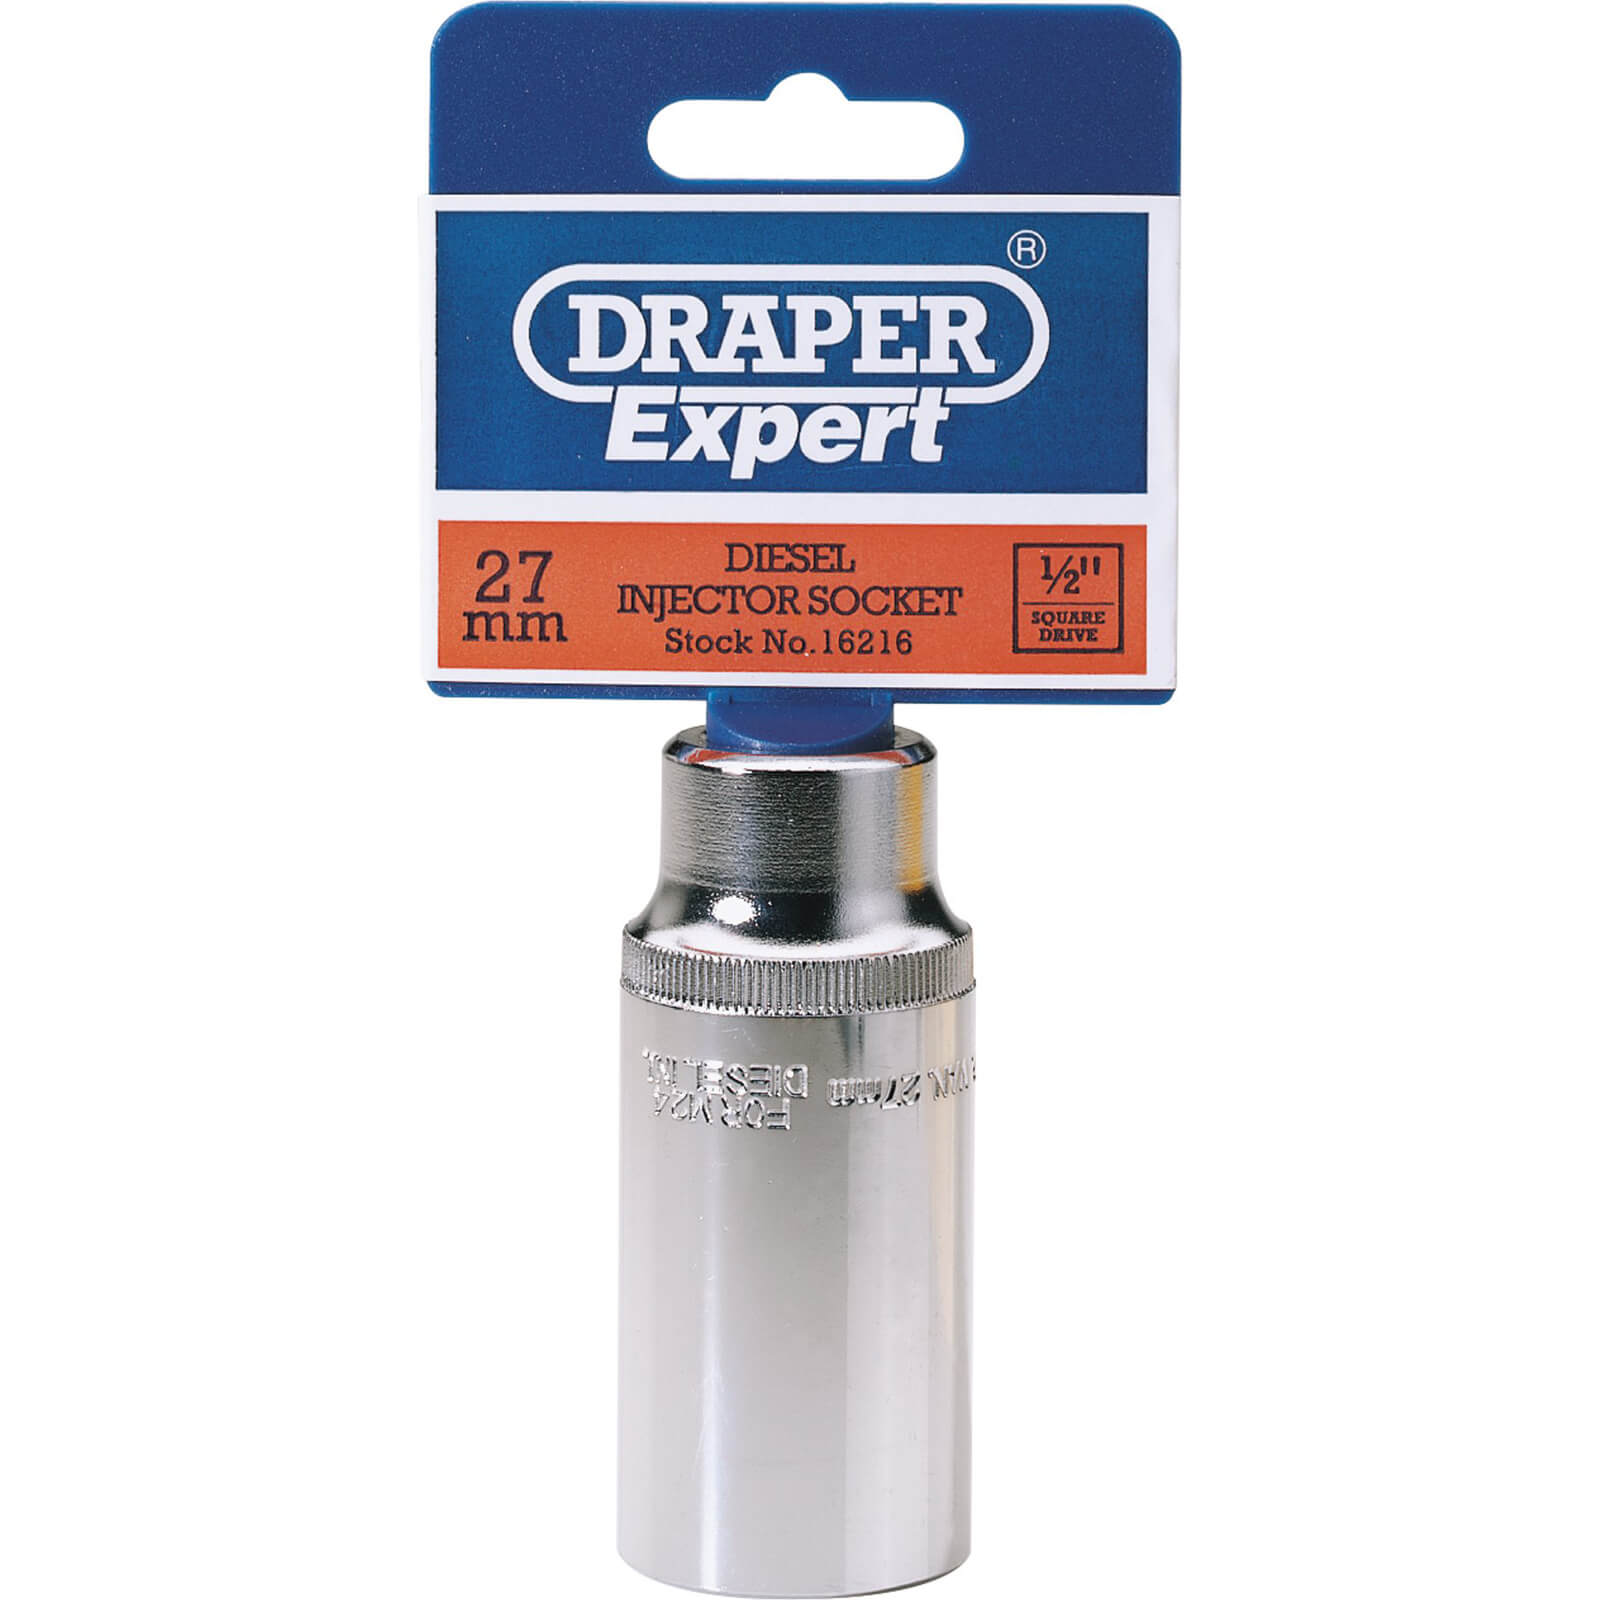 Image of Draper Expert 1/2" Drive Diesel Injector Socket 1/2" 27mm